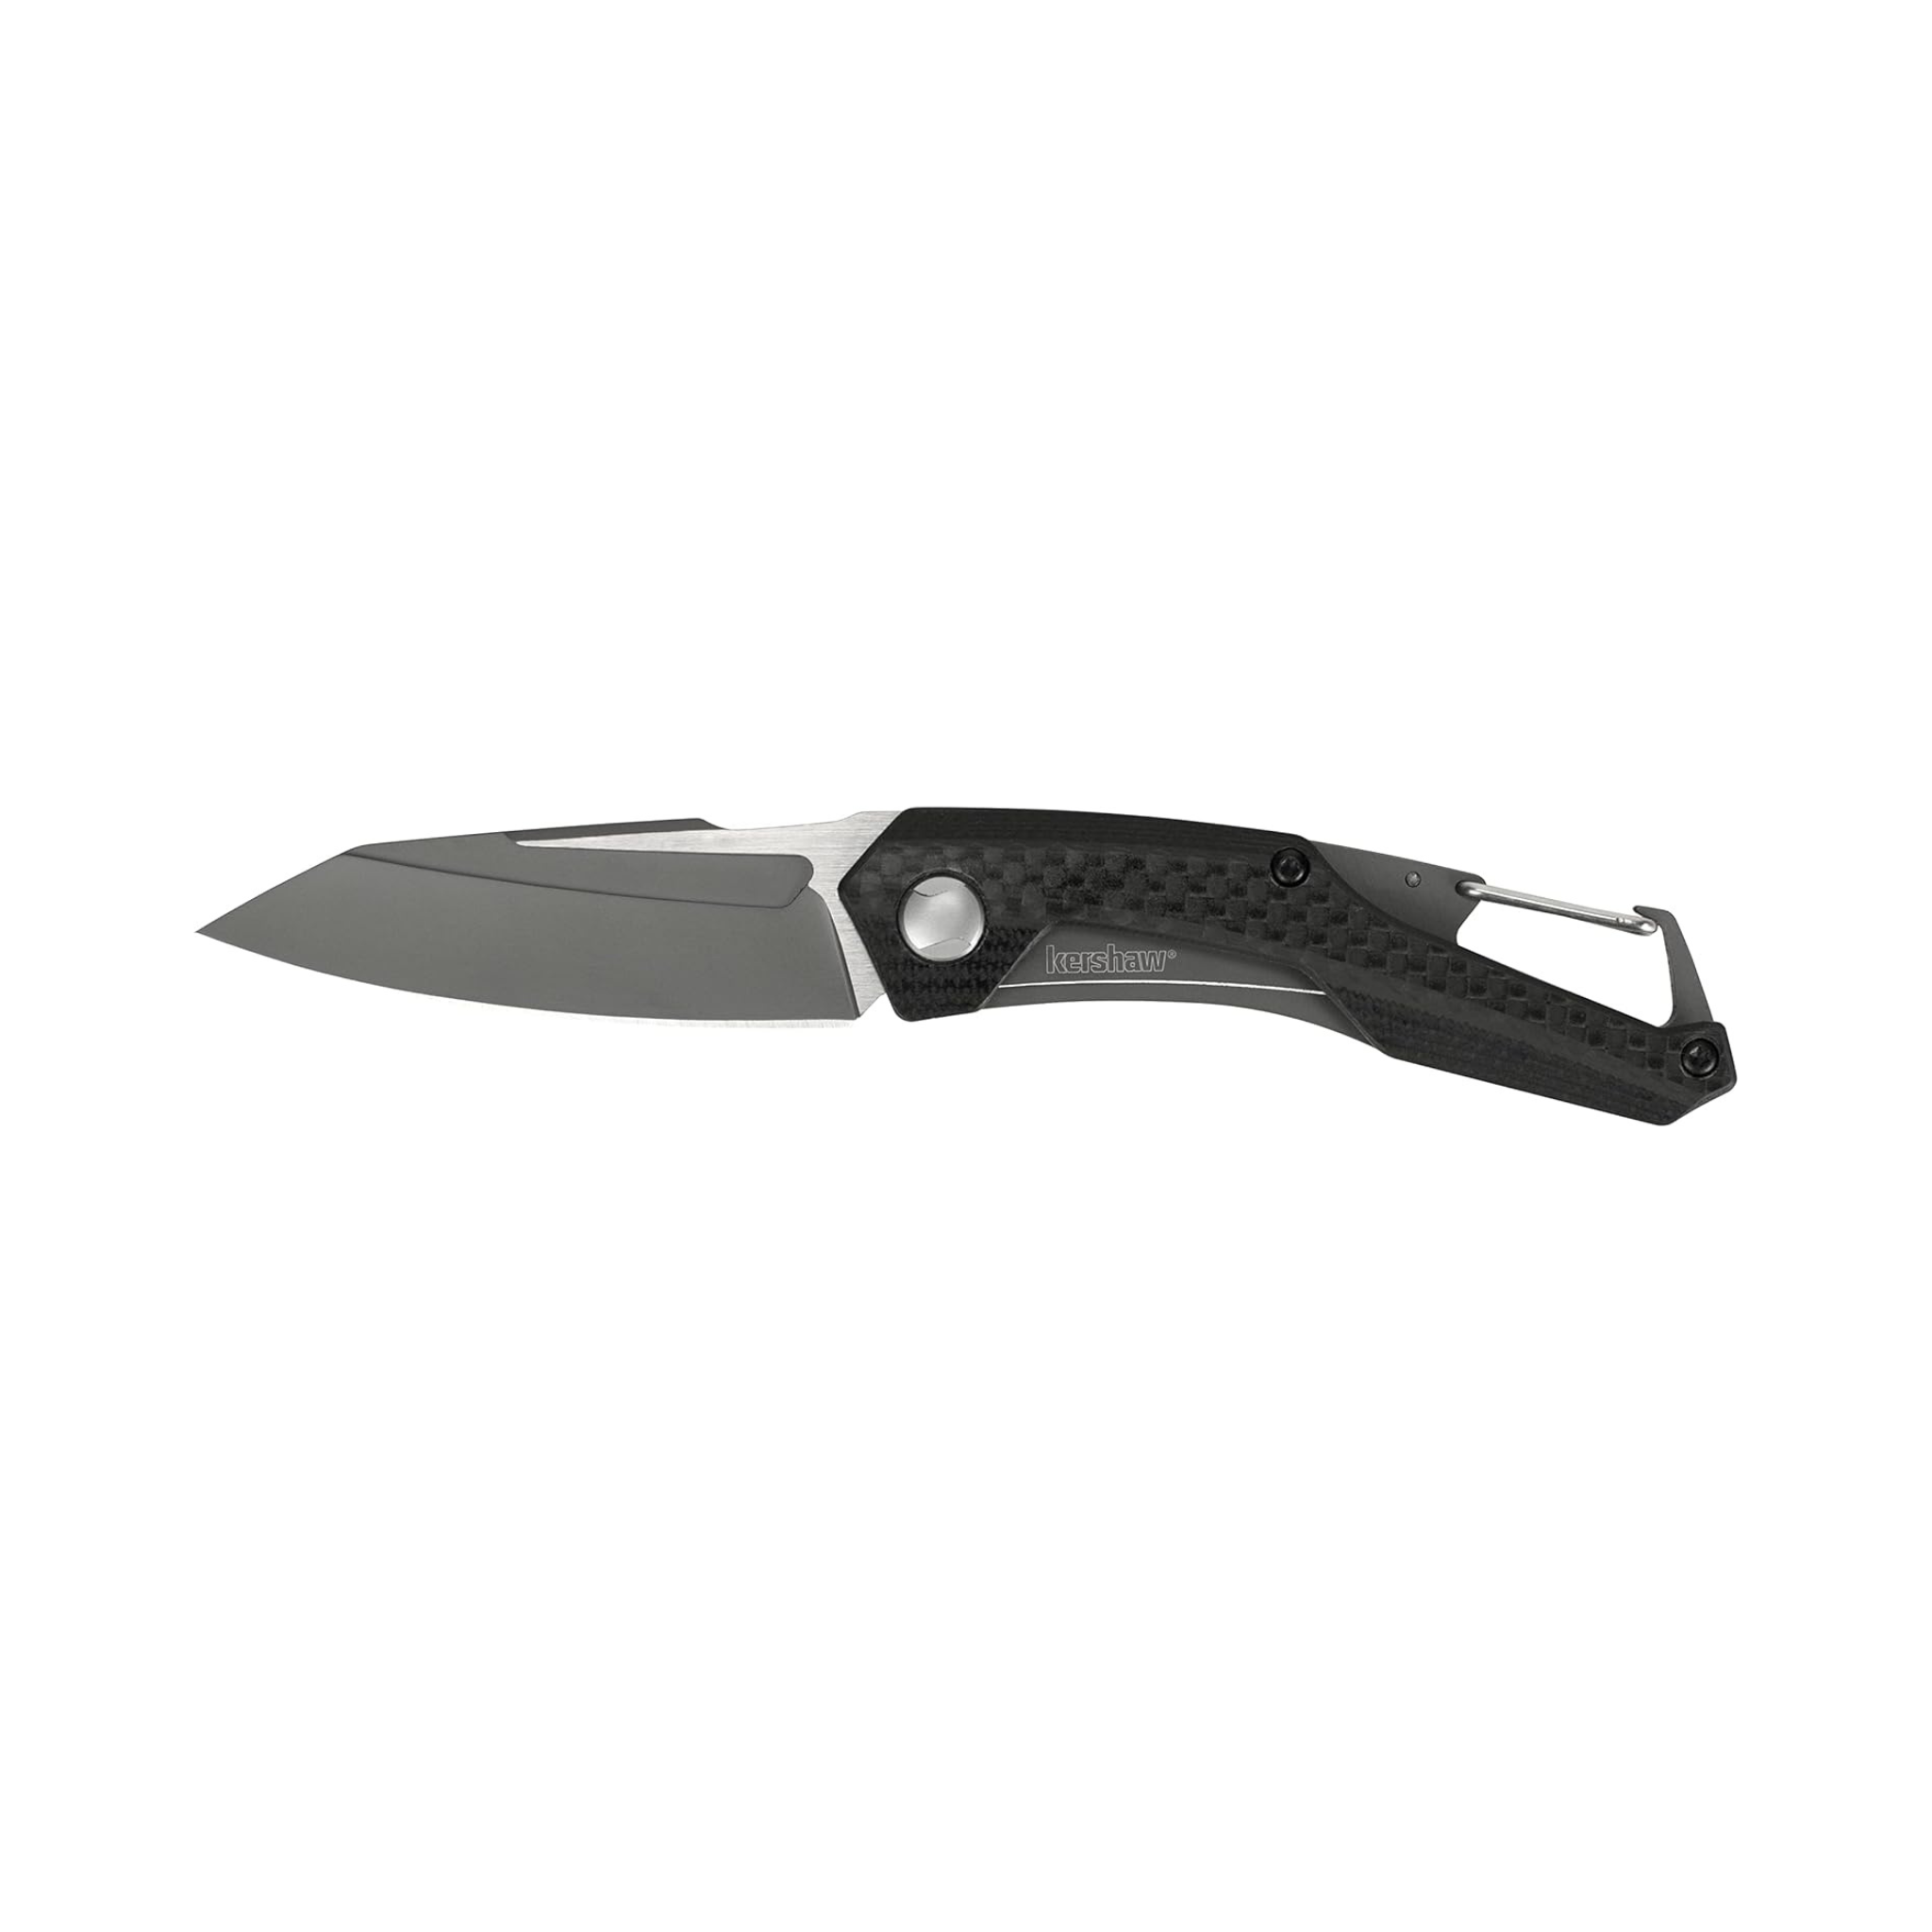 Kershaw Reverb Pocket Folding Knife with 2.5" Manual Open Blade (Black)